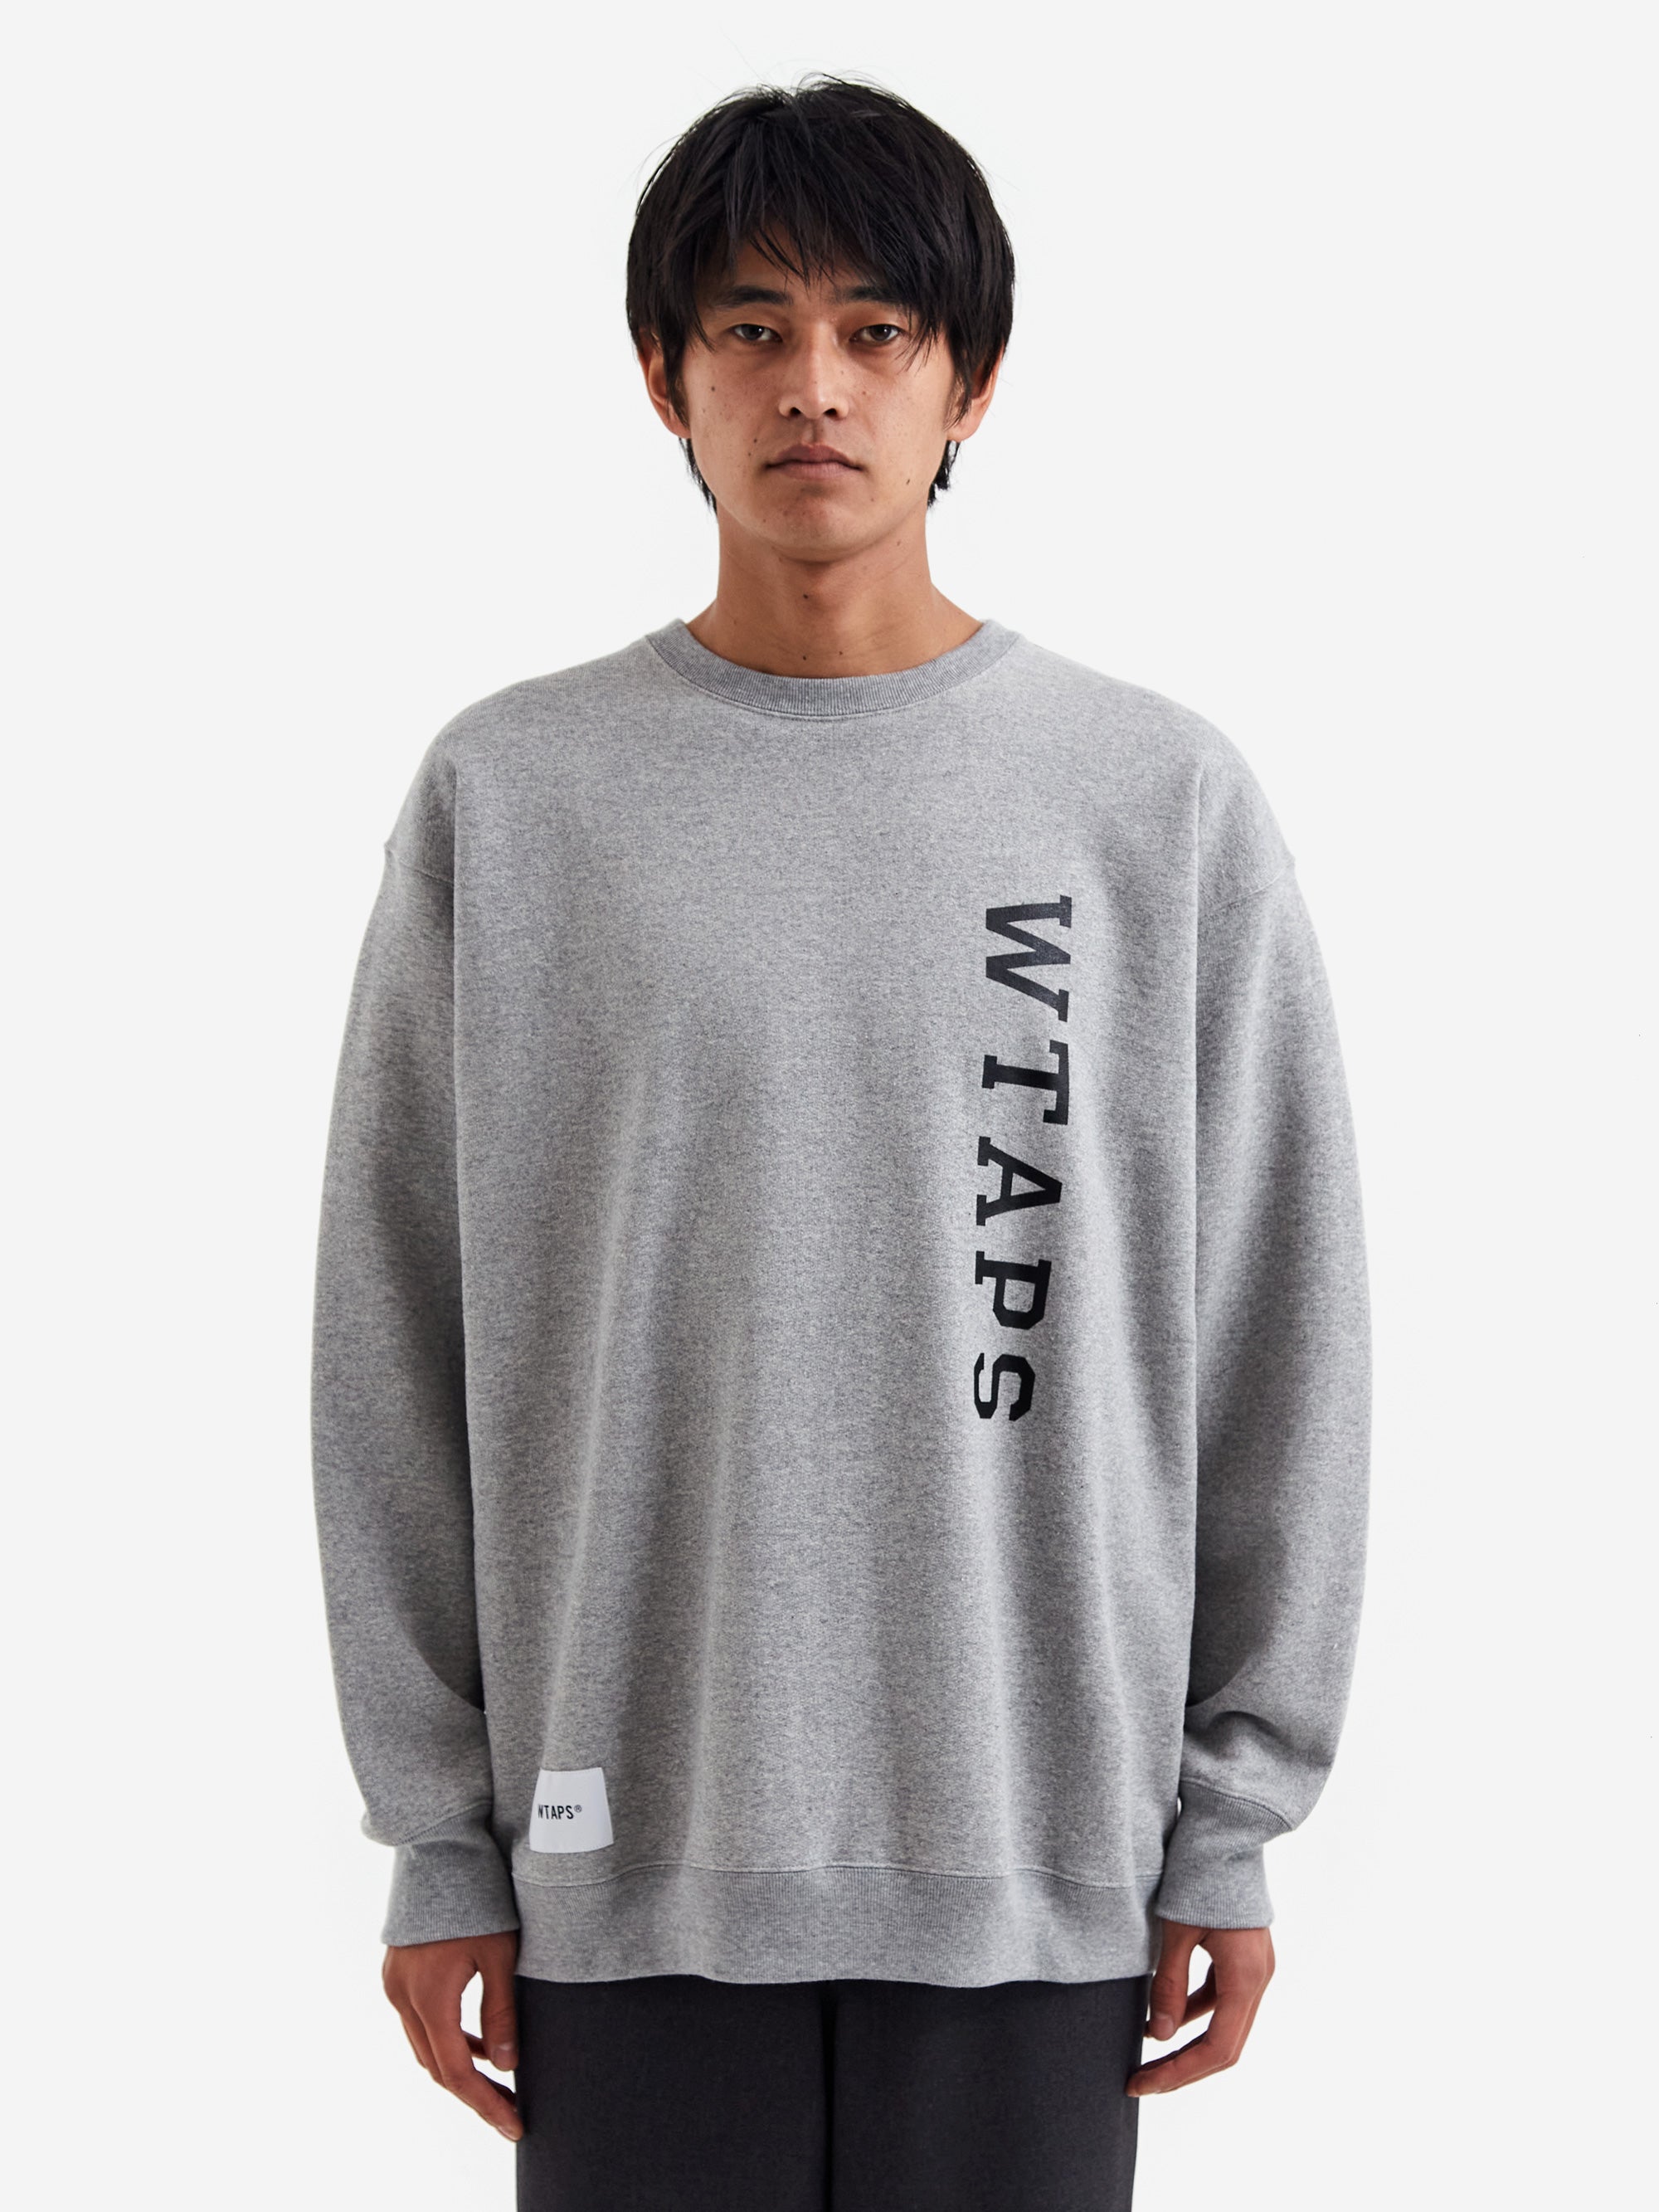 WTAPS Design 01 Sweater Cotton College-